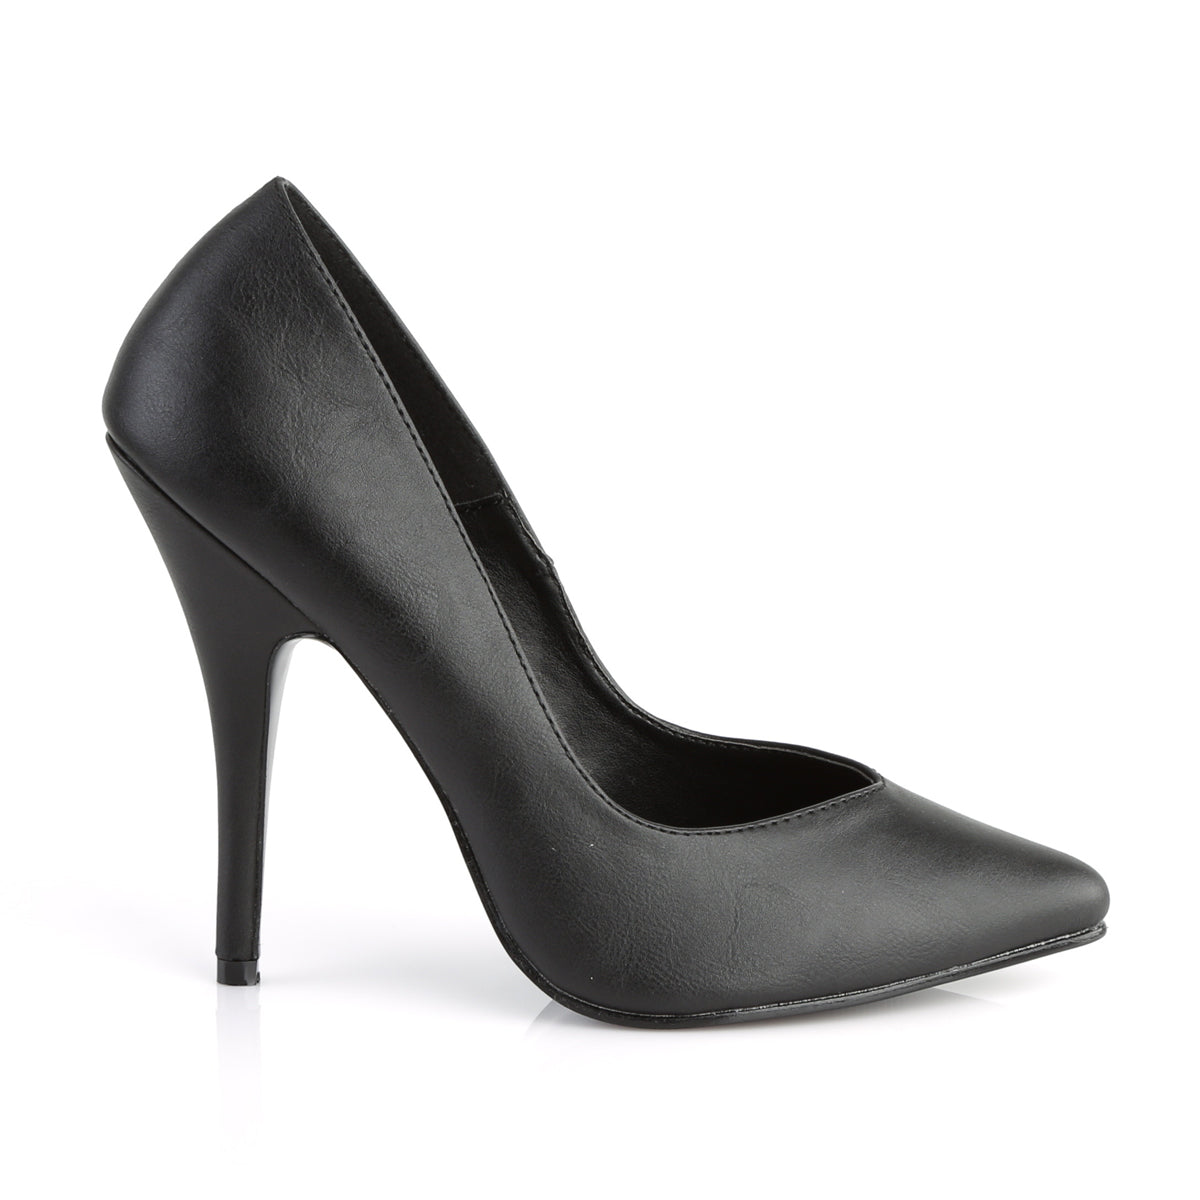 SEDUCE-420V Pleaser Sexy Shoe 5 Inch Heel Black Fetish Shoe-Pleaser- Sexy Shoes Fetish Heels